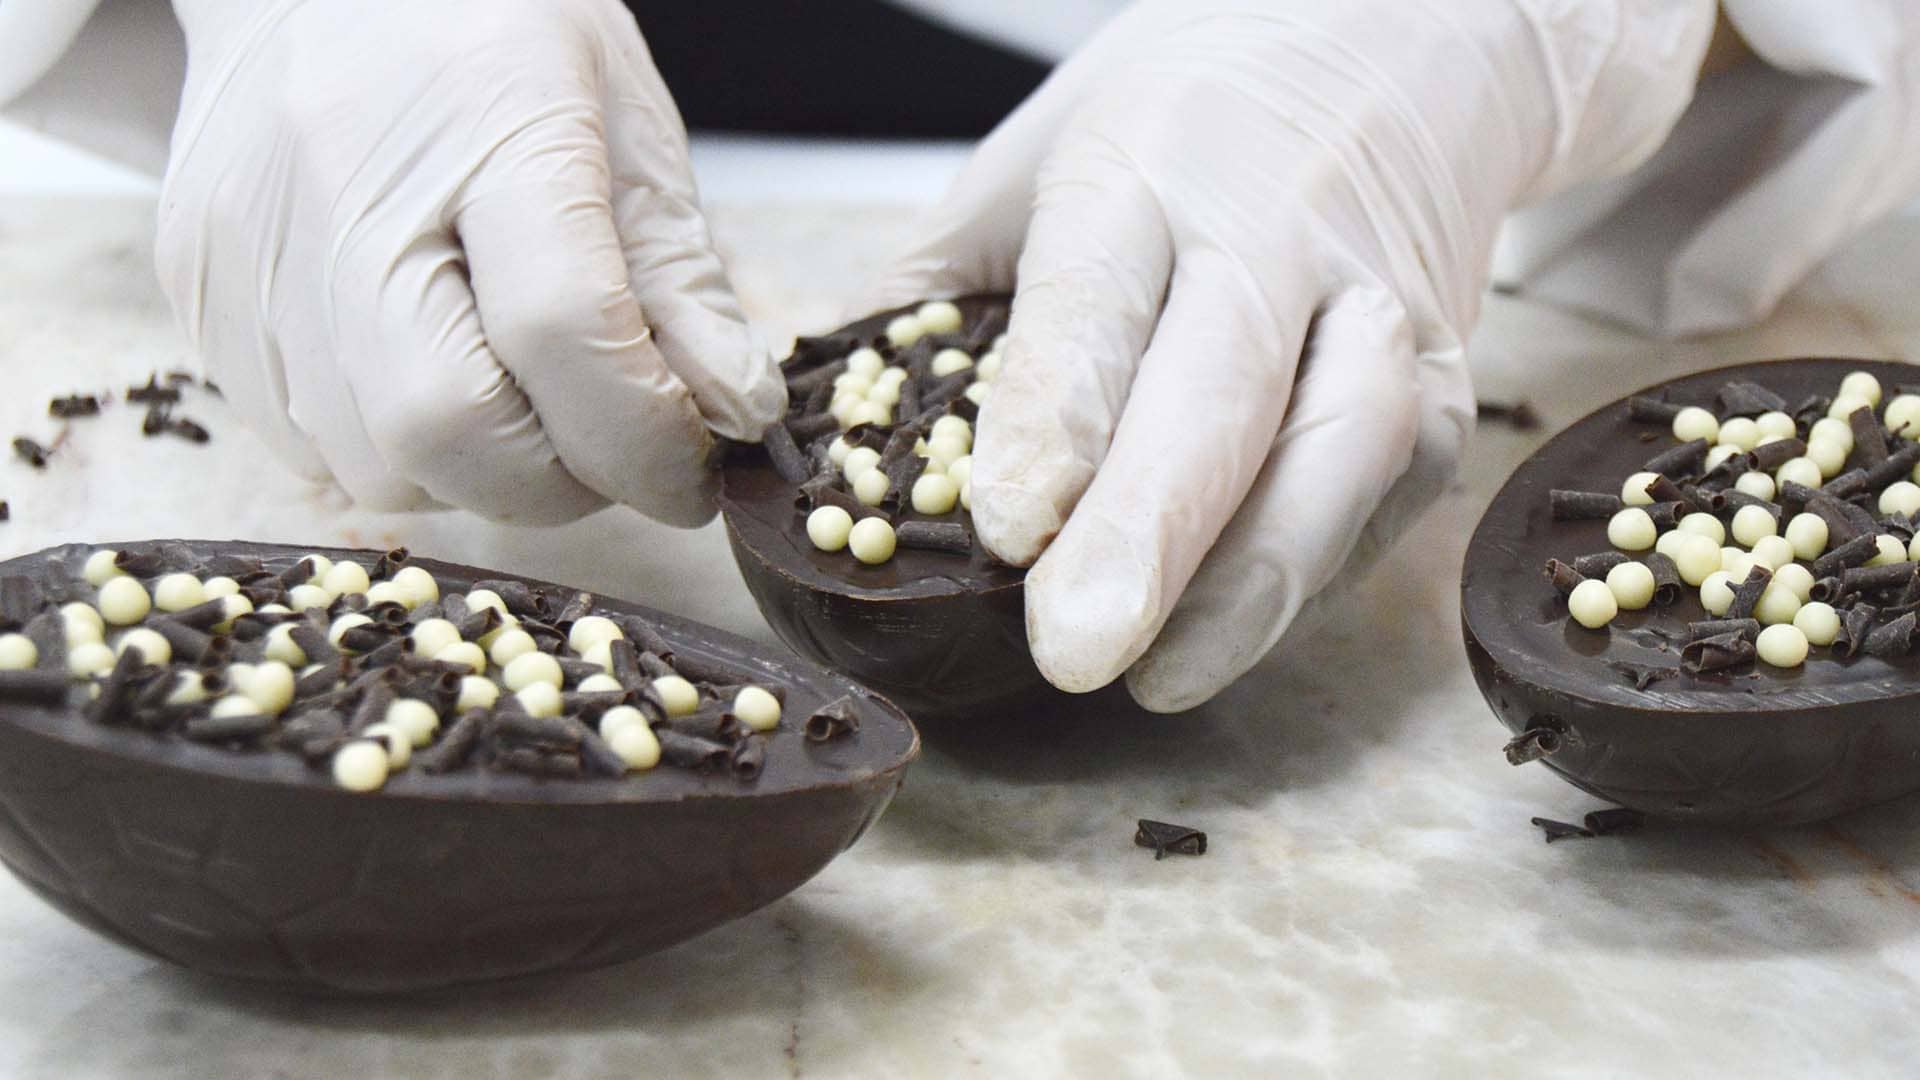 Descubra tudo sobre Ovos de Chocolate da Páscoa